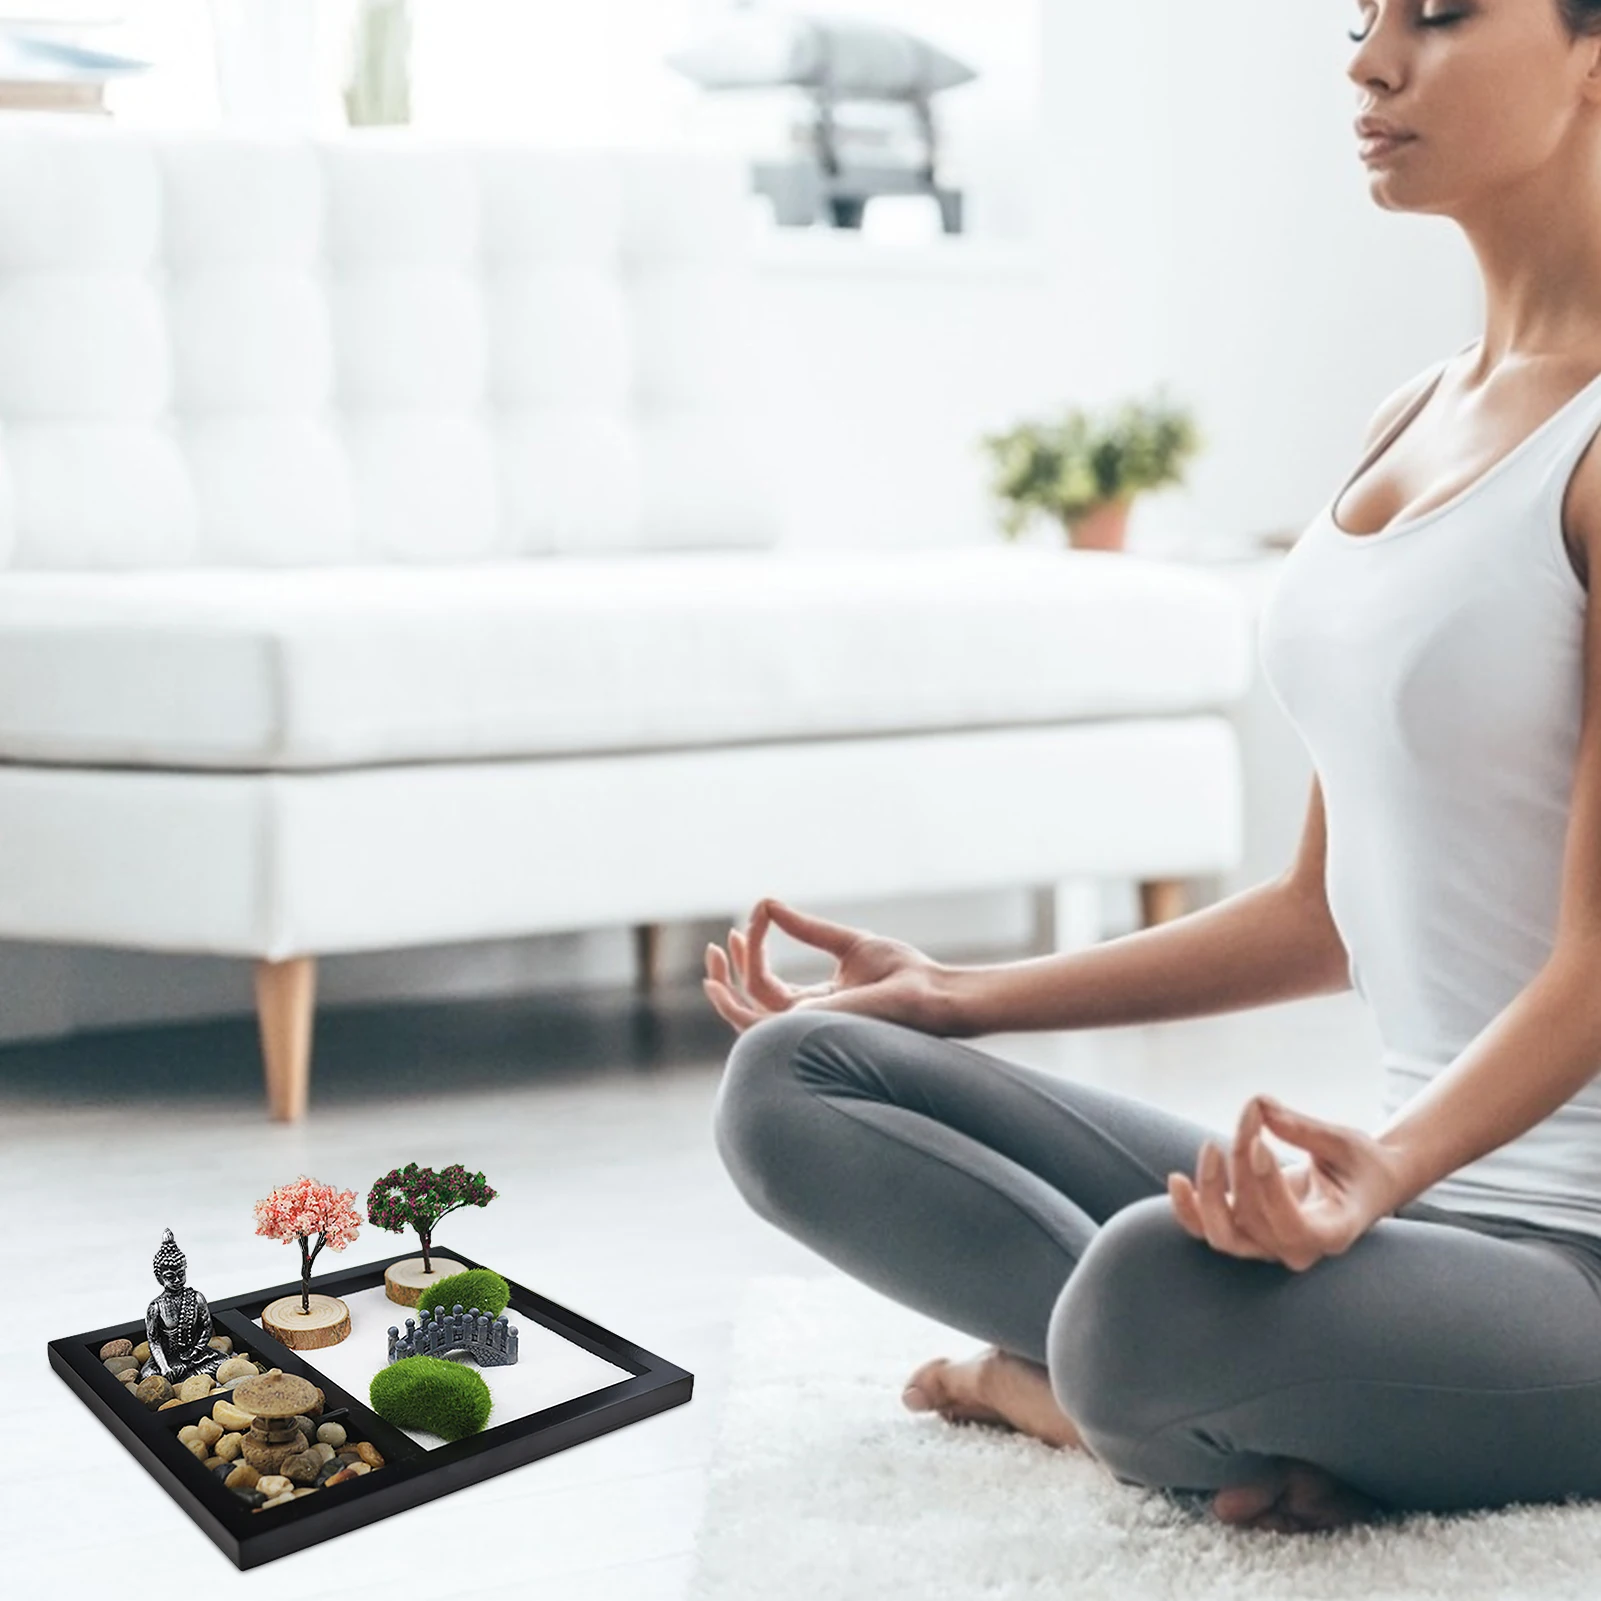 Details about   Japanese Sand Tray Zen Garden Kit Mini Meditation Tabletop Decor For Home Office 